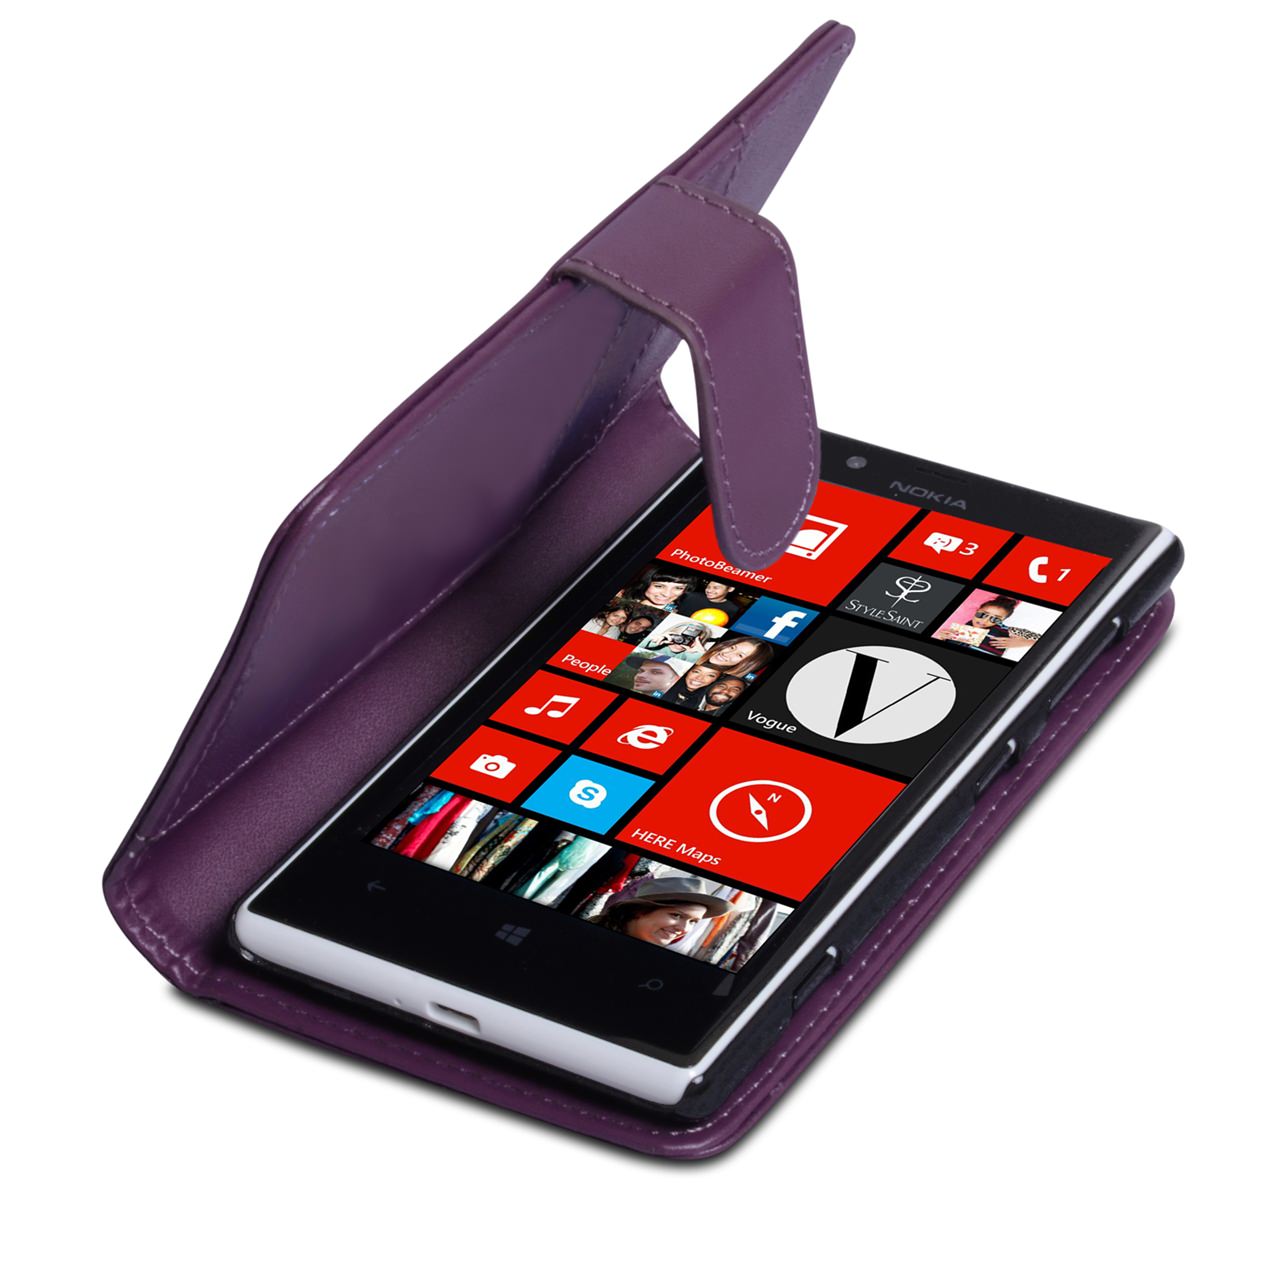 YouSave Nokia Lumia 720 Leather Effect Wallet Case - Purple